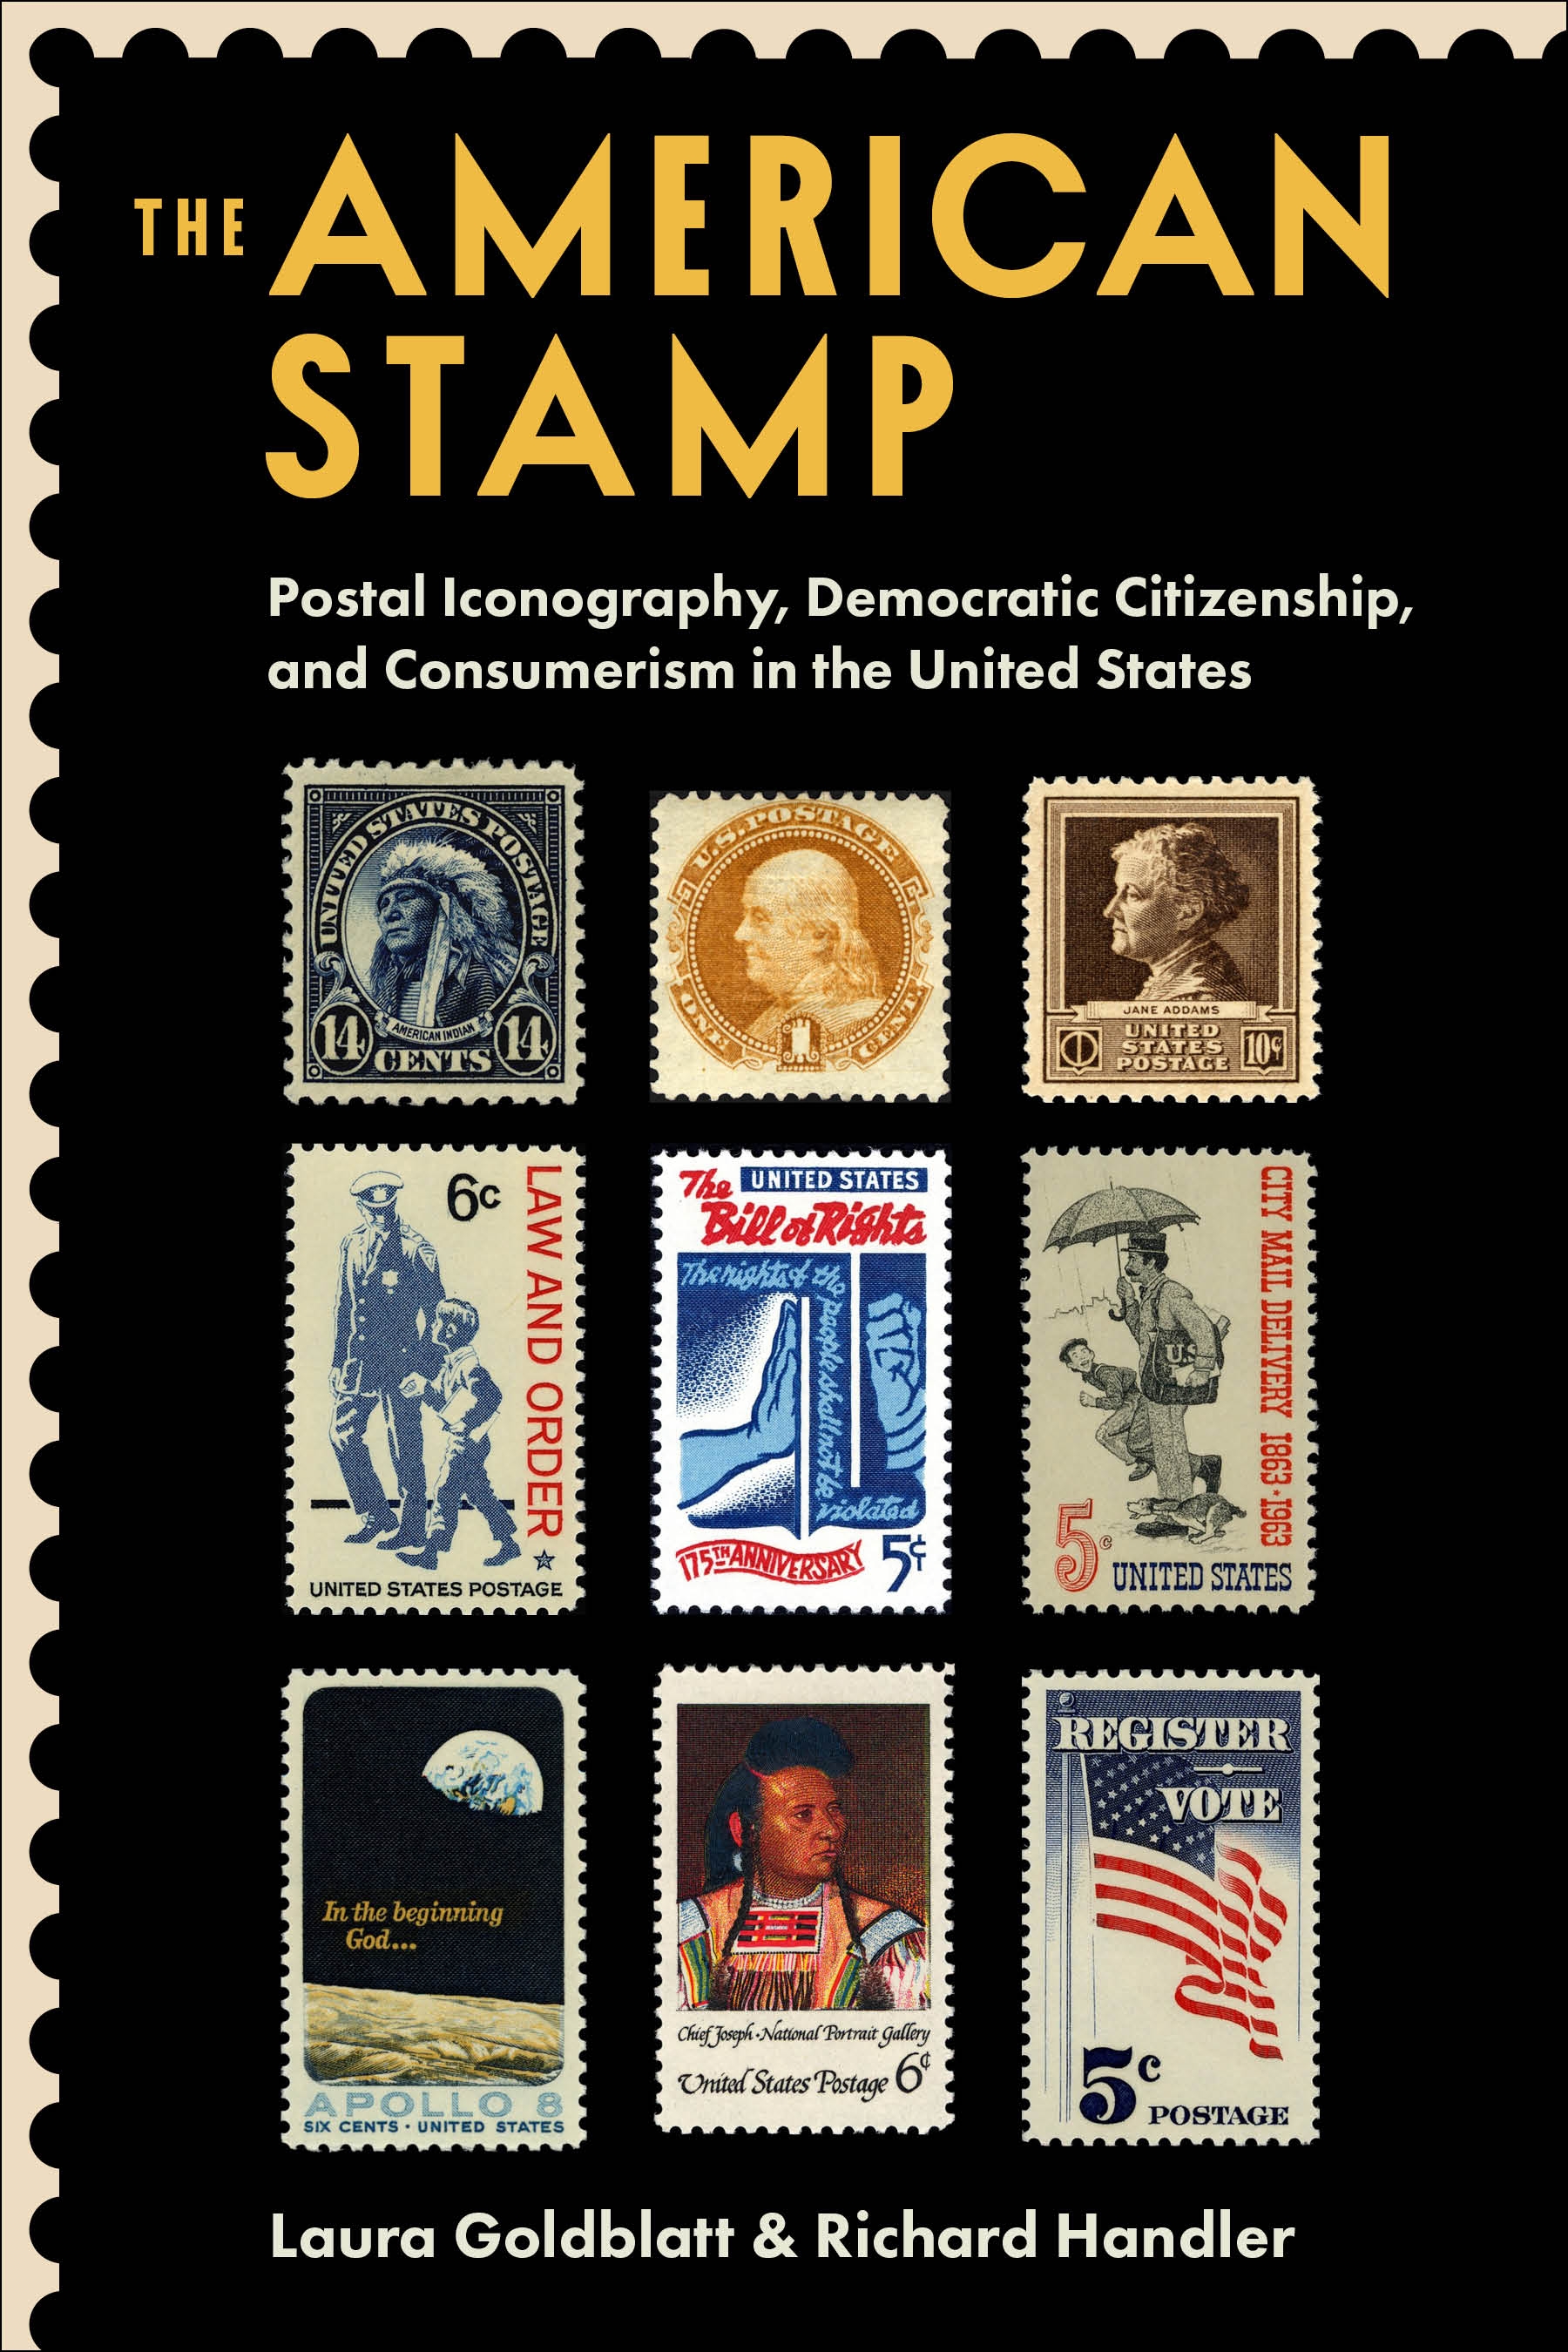 Warman's U.S. Stamps Field Guide a book by Maurice D. Wozniak